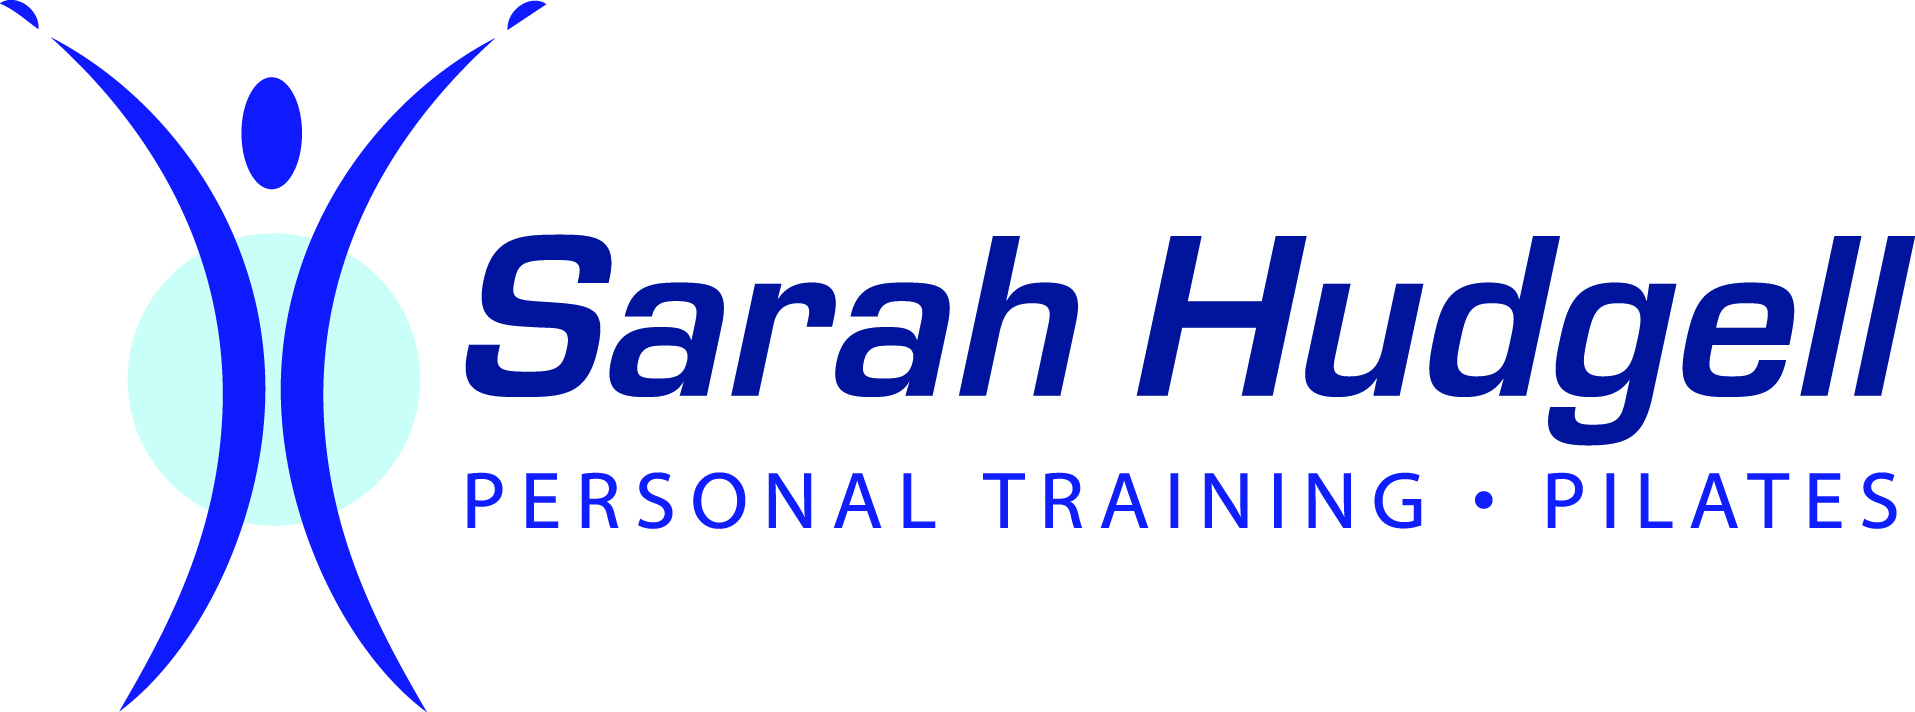 Sarah Hudgell Personal Training